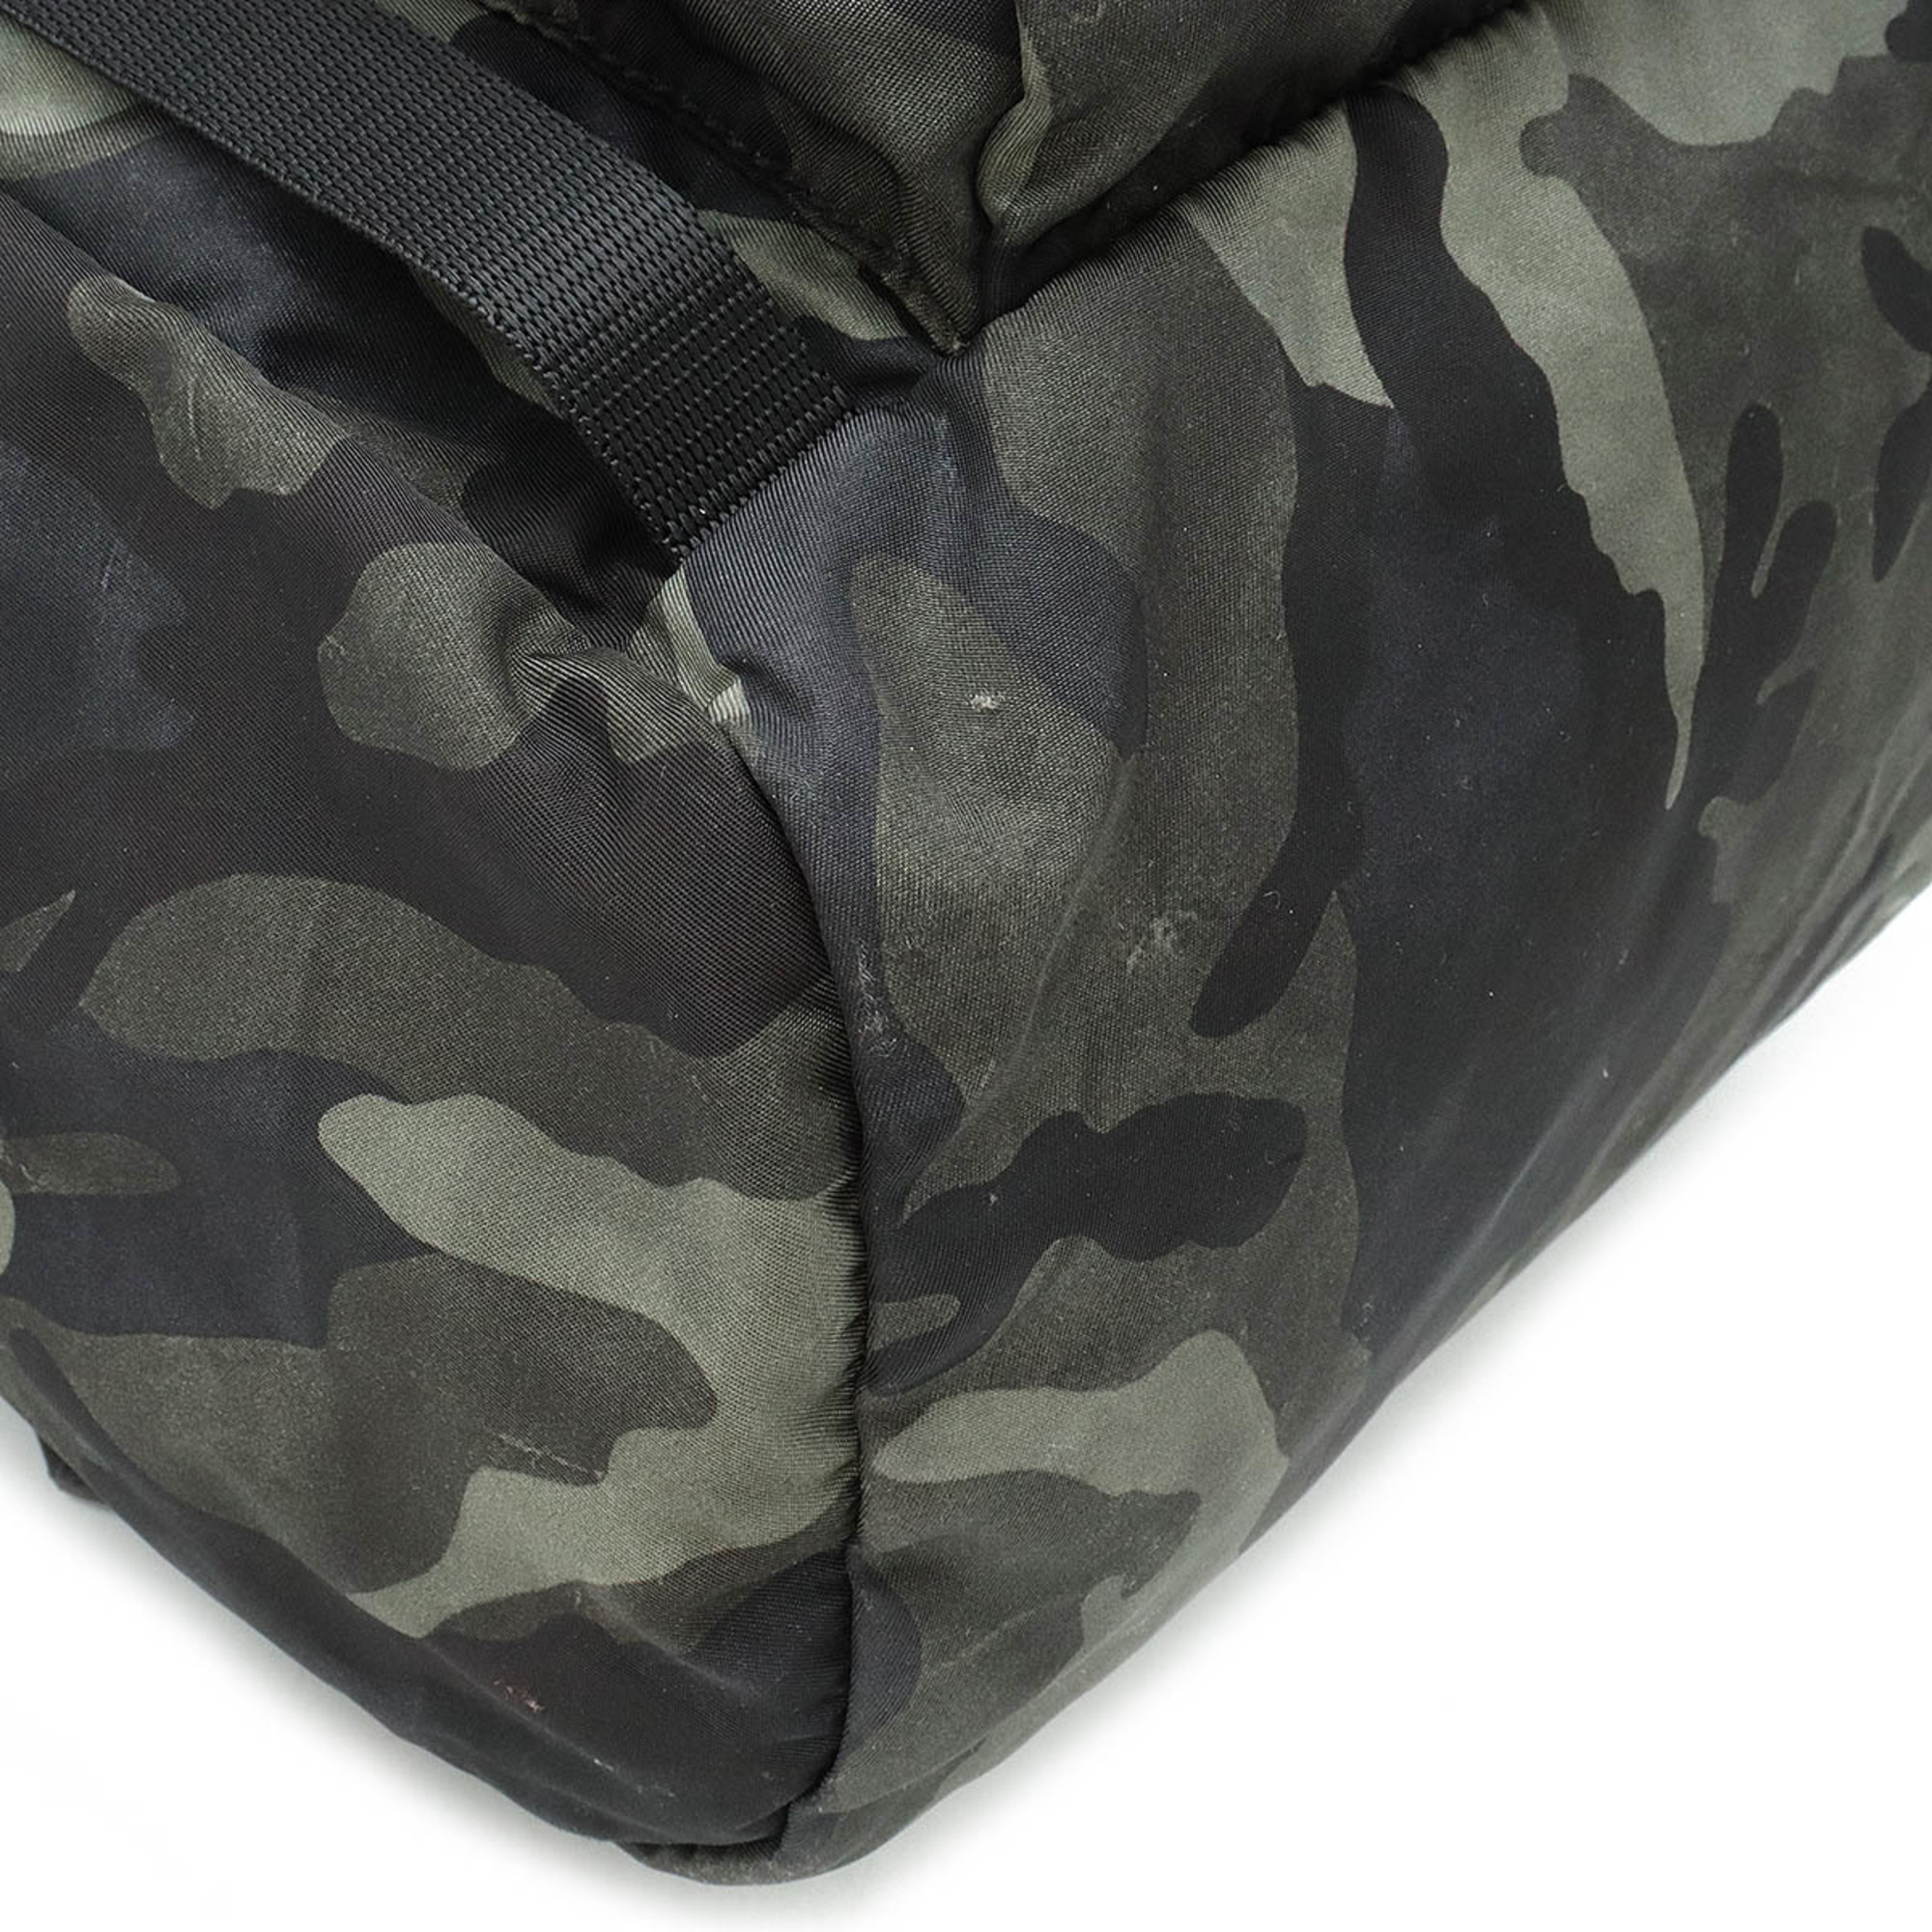 PRADA Prada rucksack backpack camouflage pattern nylon FUMO green multicolor V135